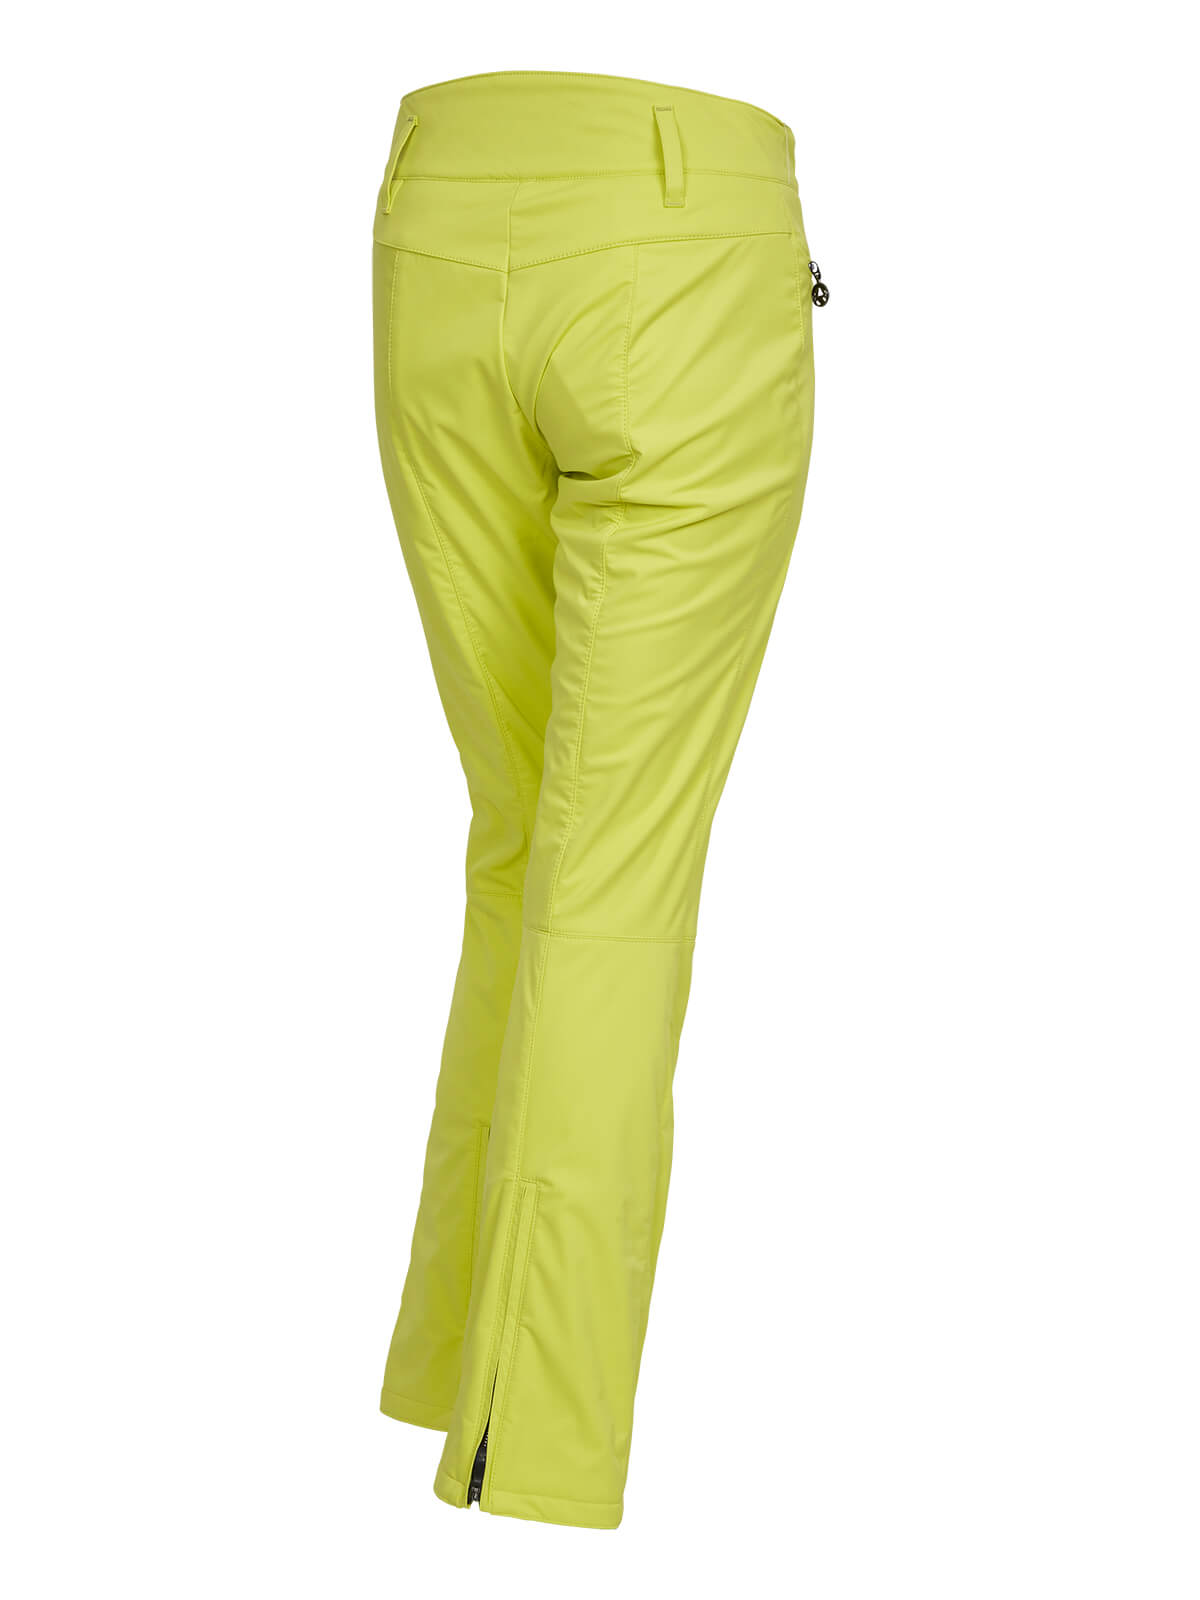 Штаны горнолыжные Sportalm 19-20 W Bird Bam Yellow, цвет желтый, размер 48 SA900925 - фото 2